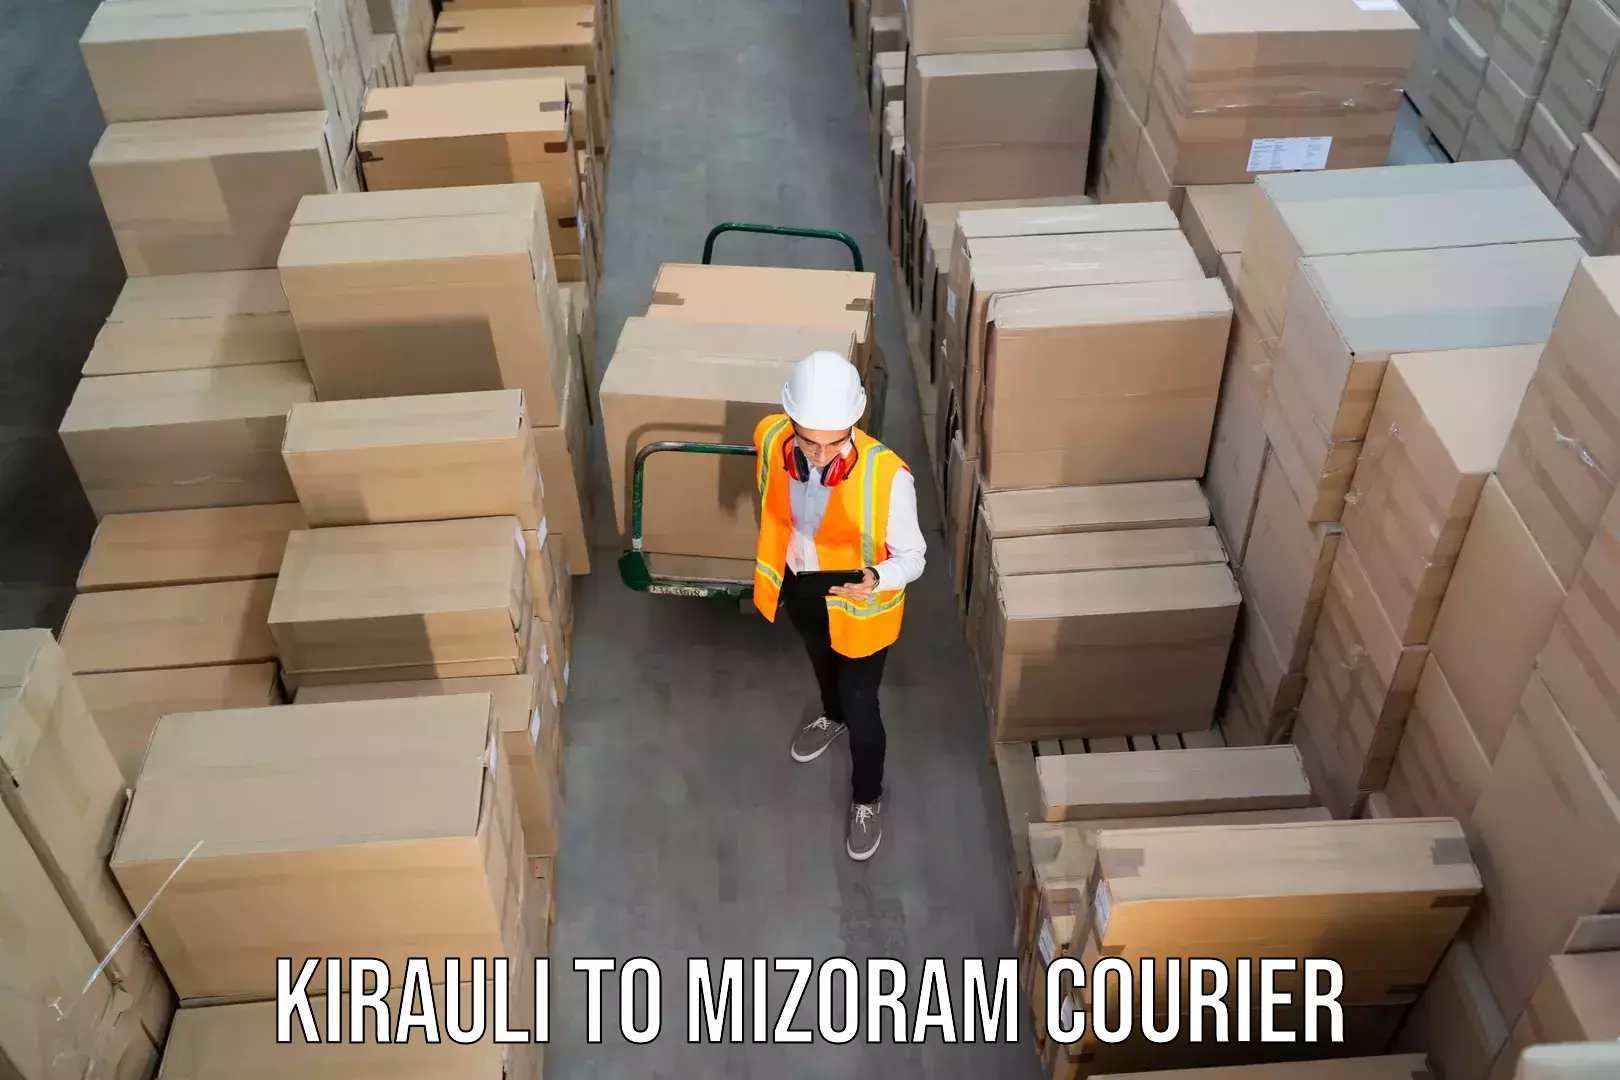 Courier service innovation Kirauli to Mizoram